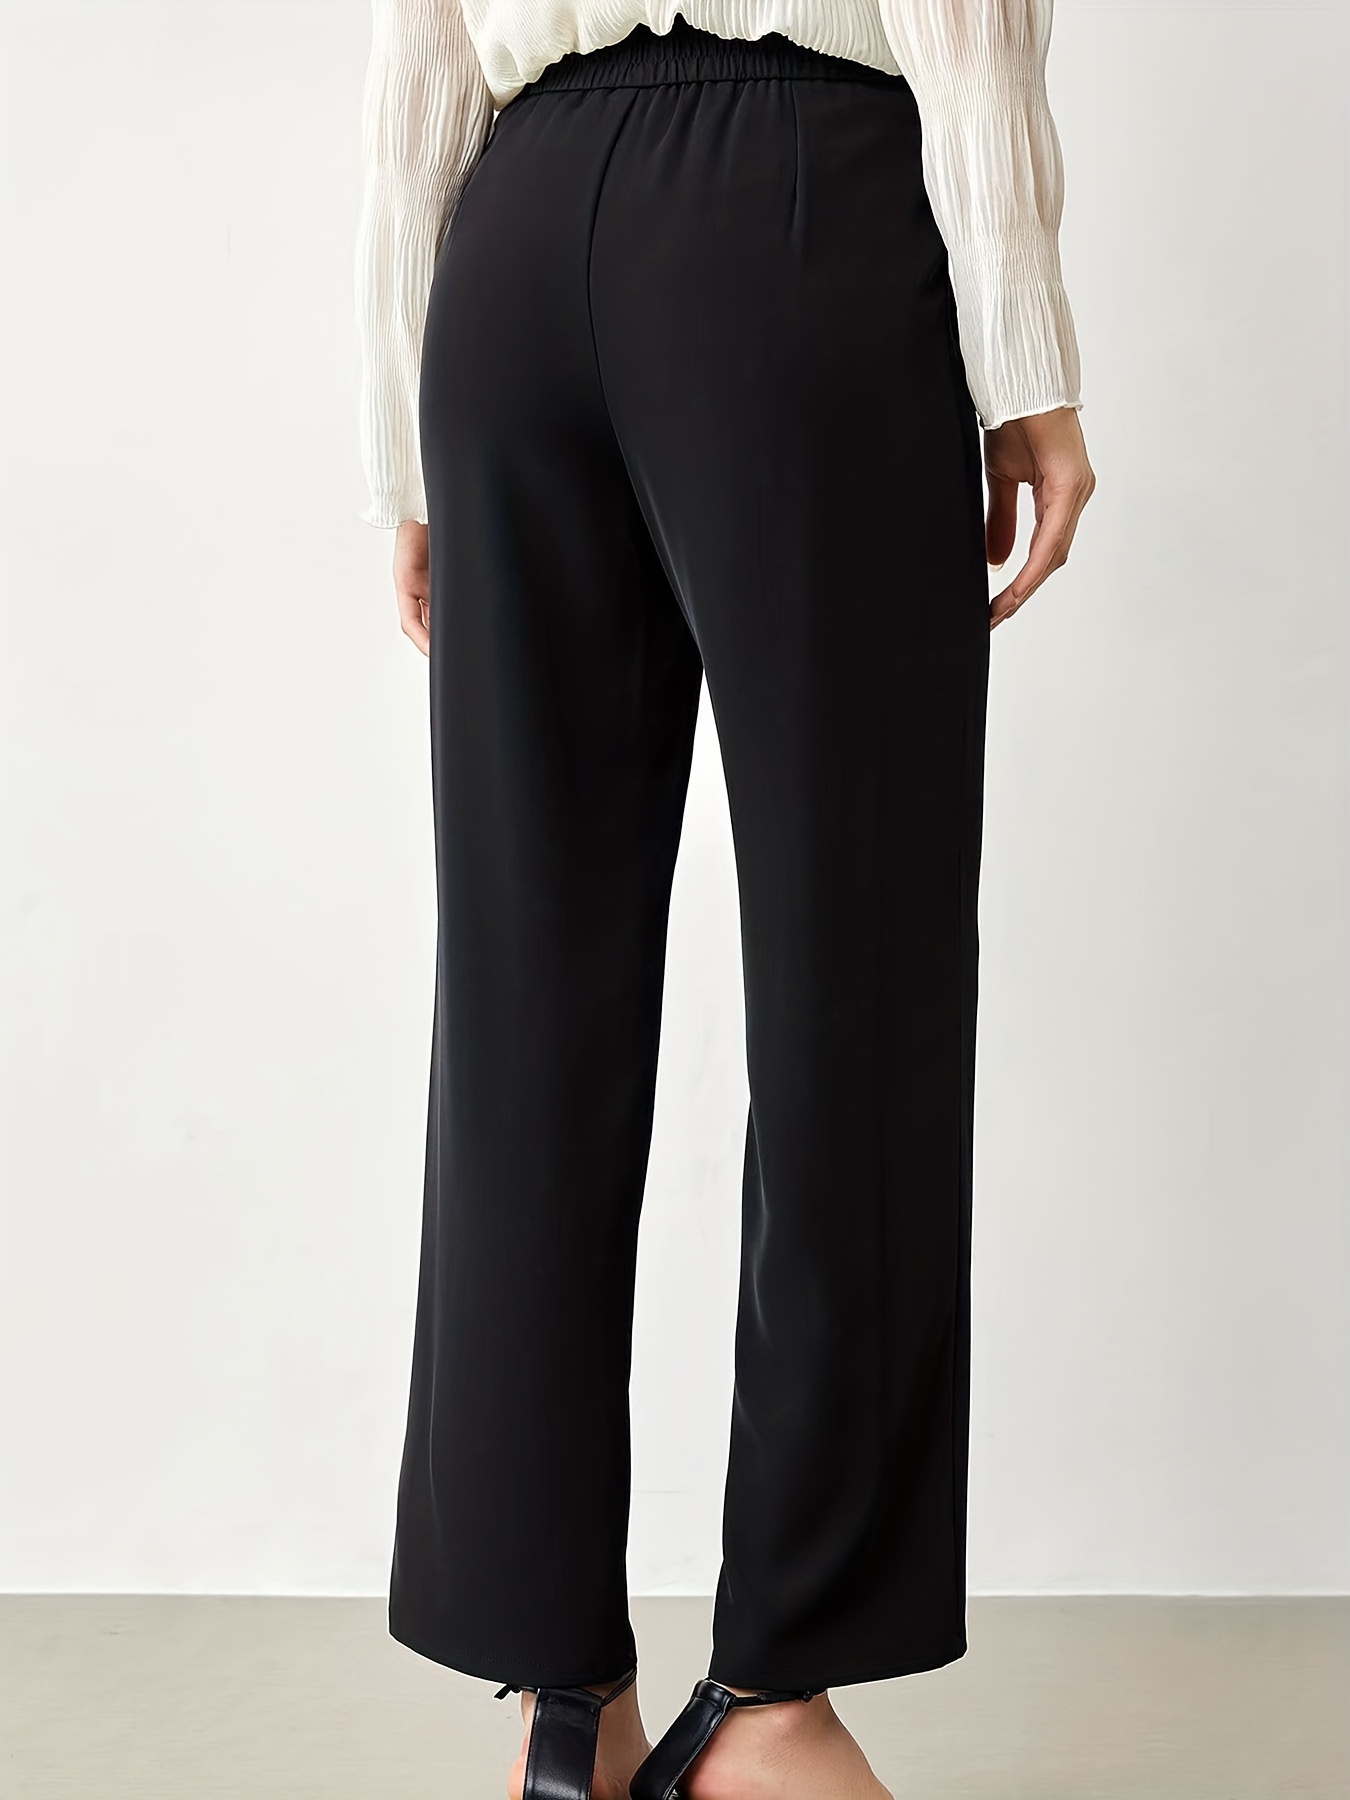 Solid Straight Leg Pants, Versatile High Waist Pants For Office & Work,  Women's Clothing